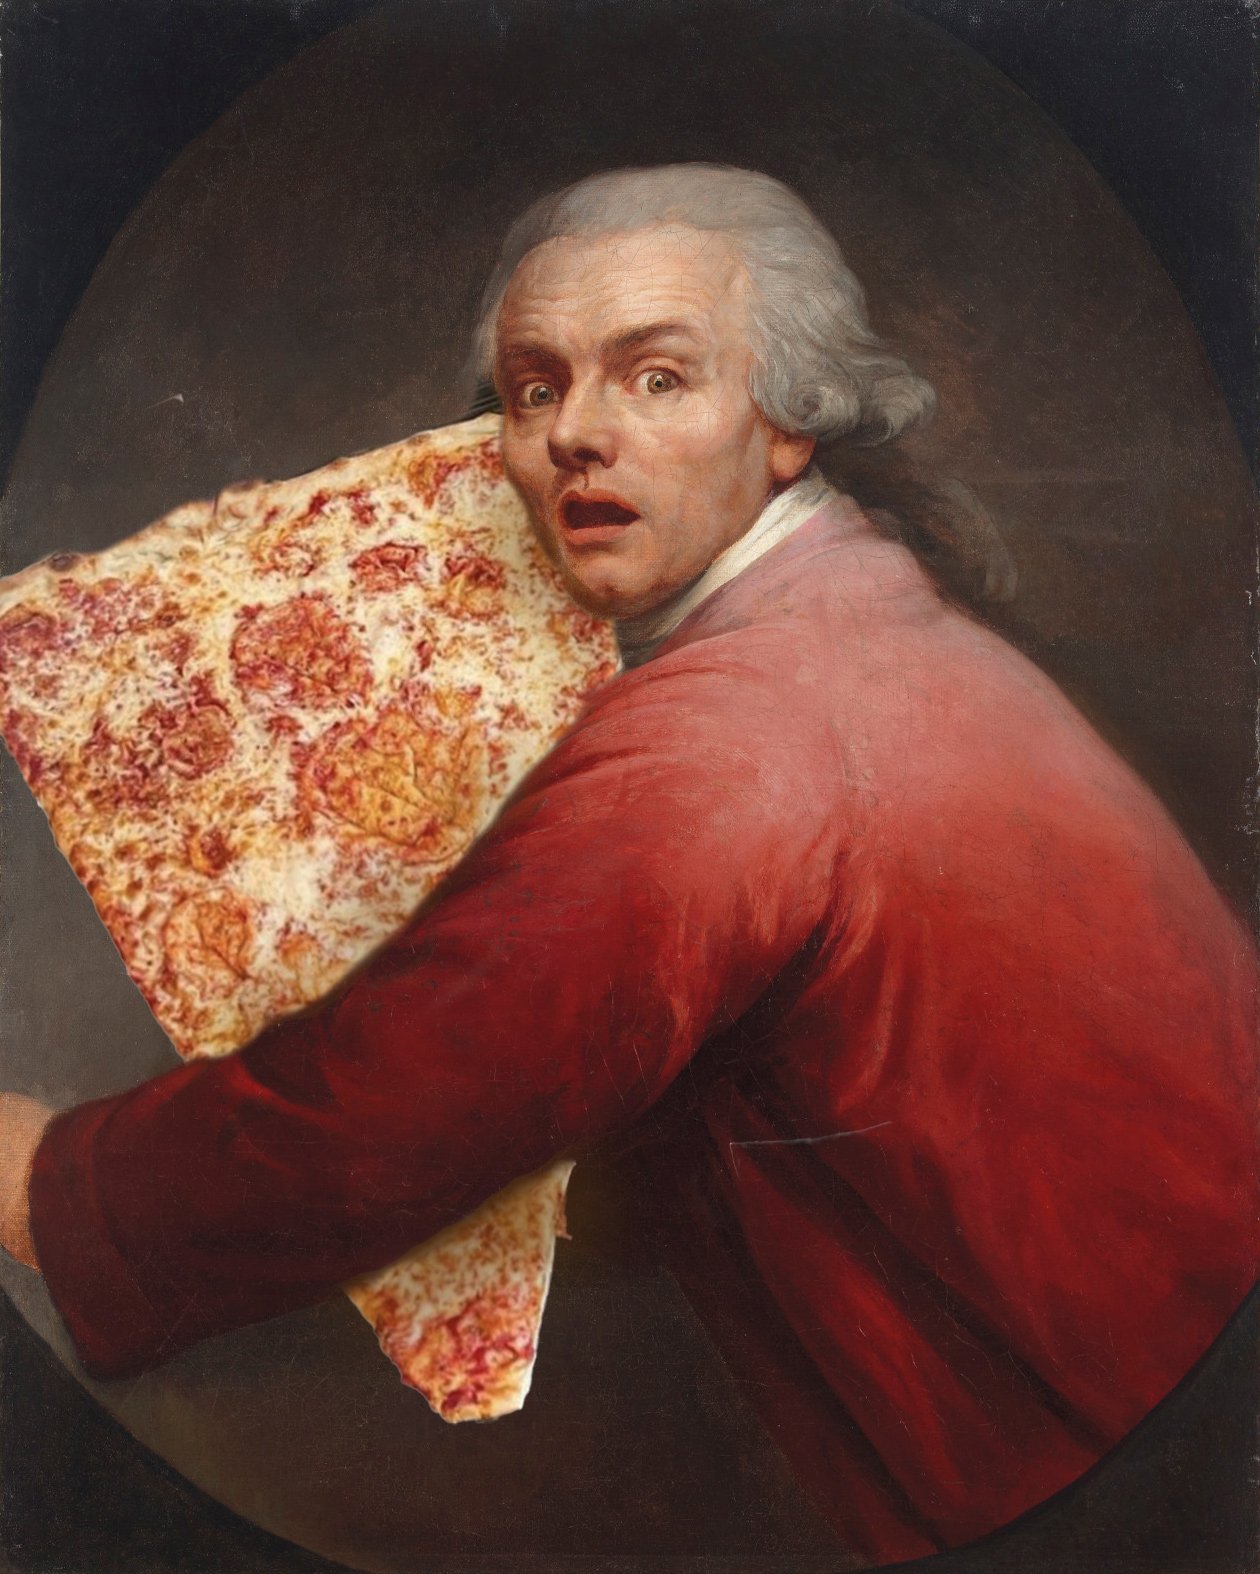 joseph-ducreux-self-portrait-in-surprise-and-terror-1791-trivium-art-history.jpg